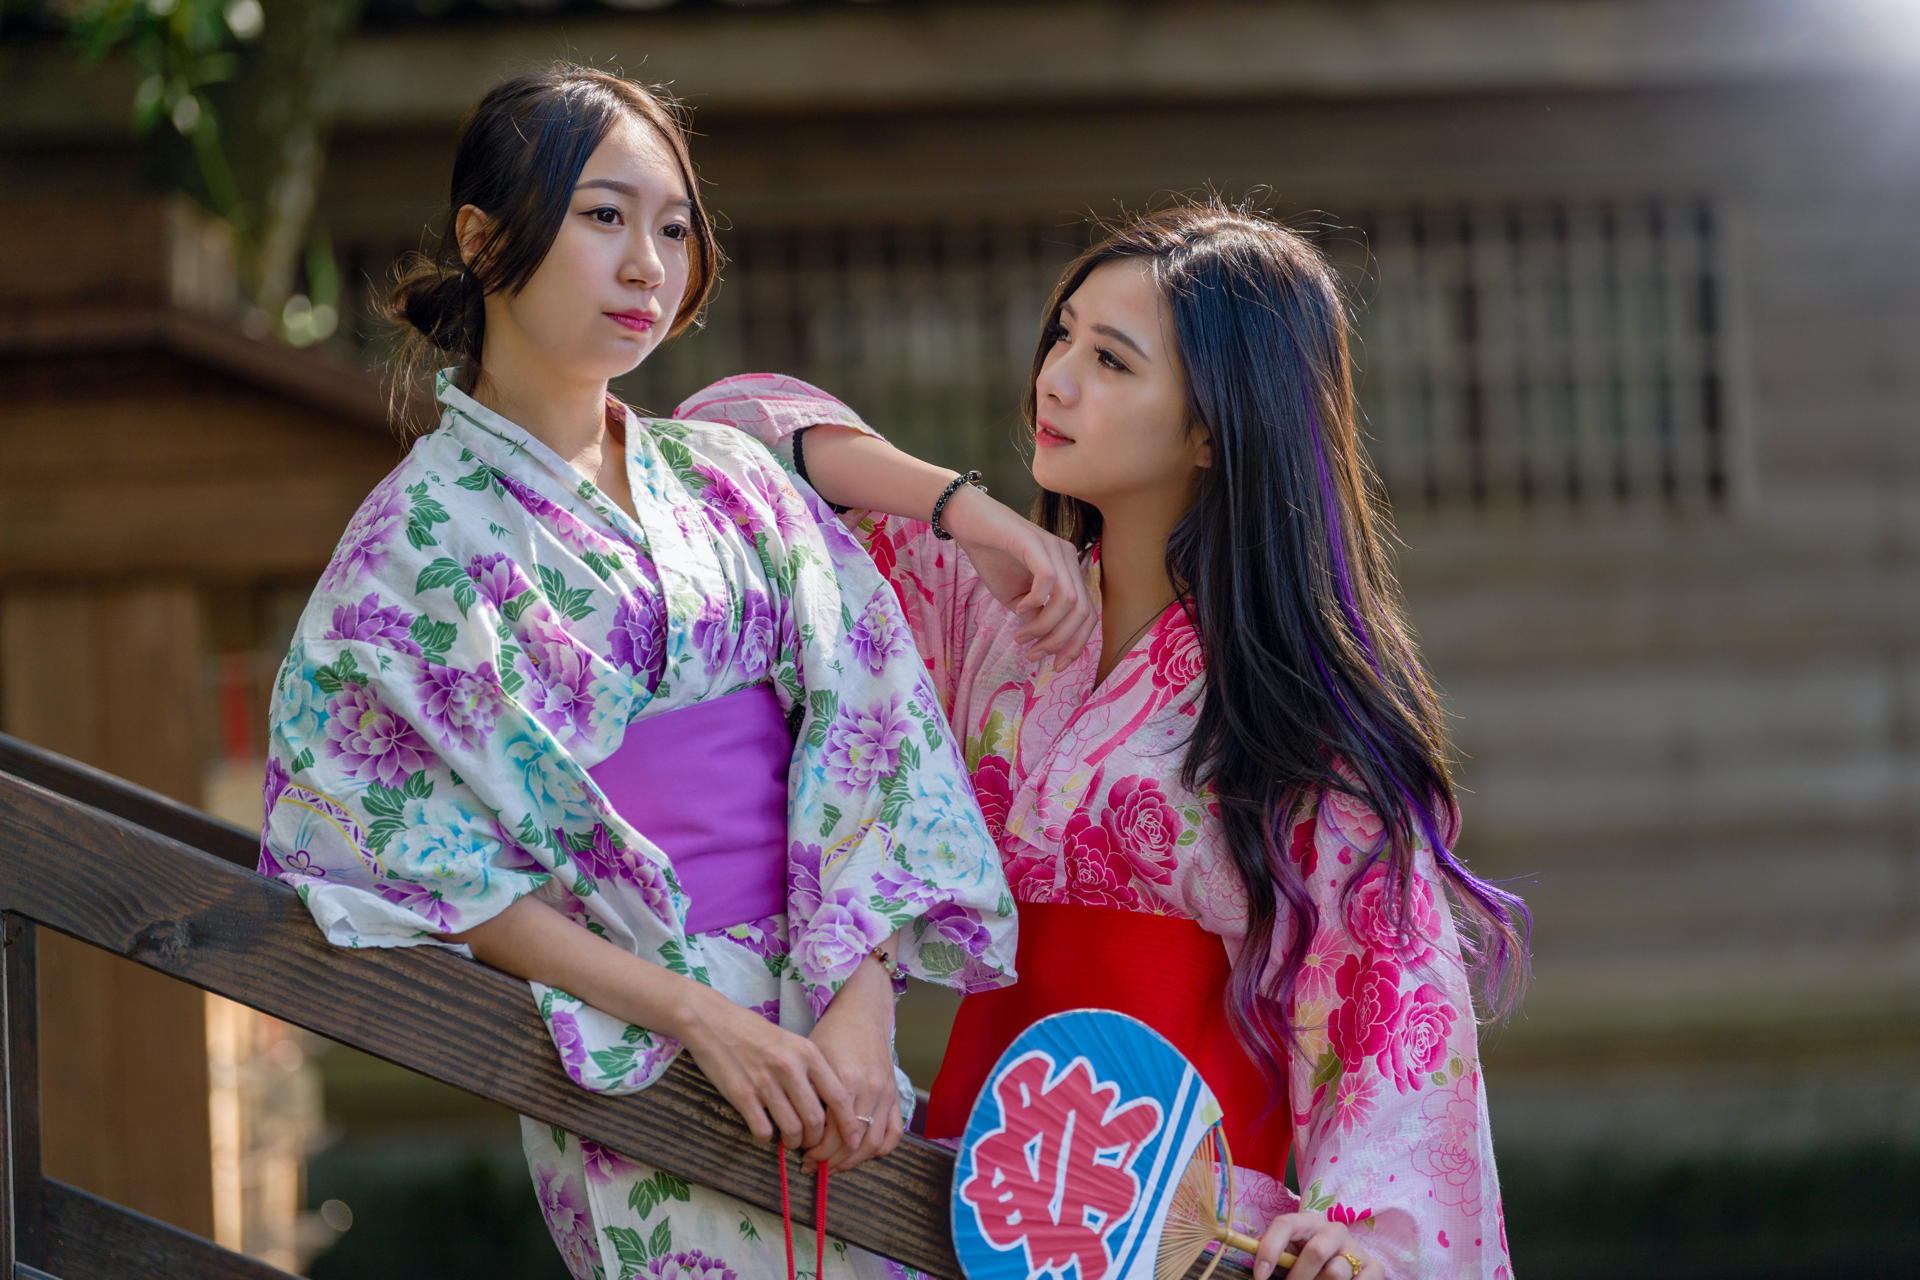 People 1920x1280 Asian women model long hair dark hair depth of field kimono hair knot hair ornament bracelets railing stairs leaning plants house hand fan two women